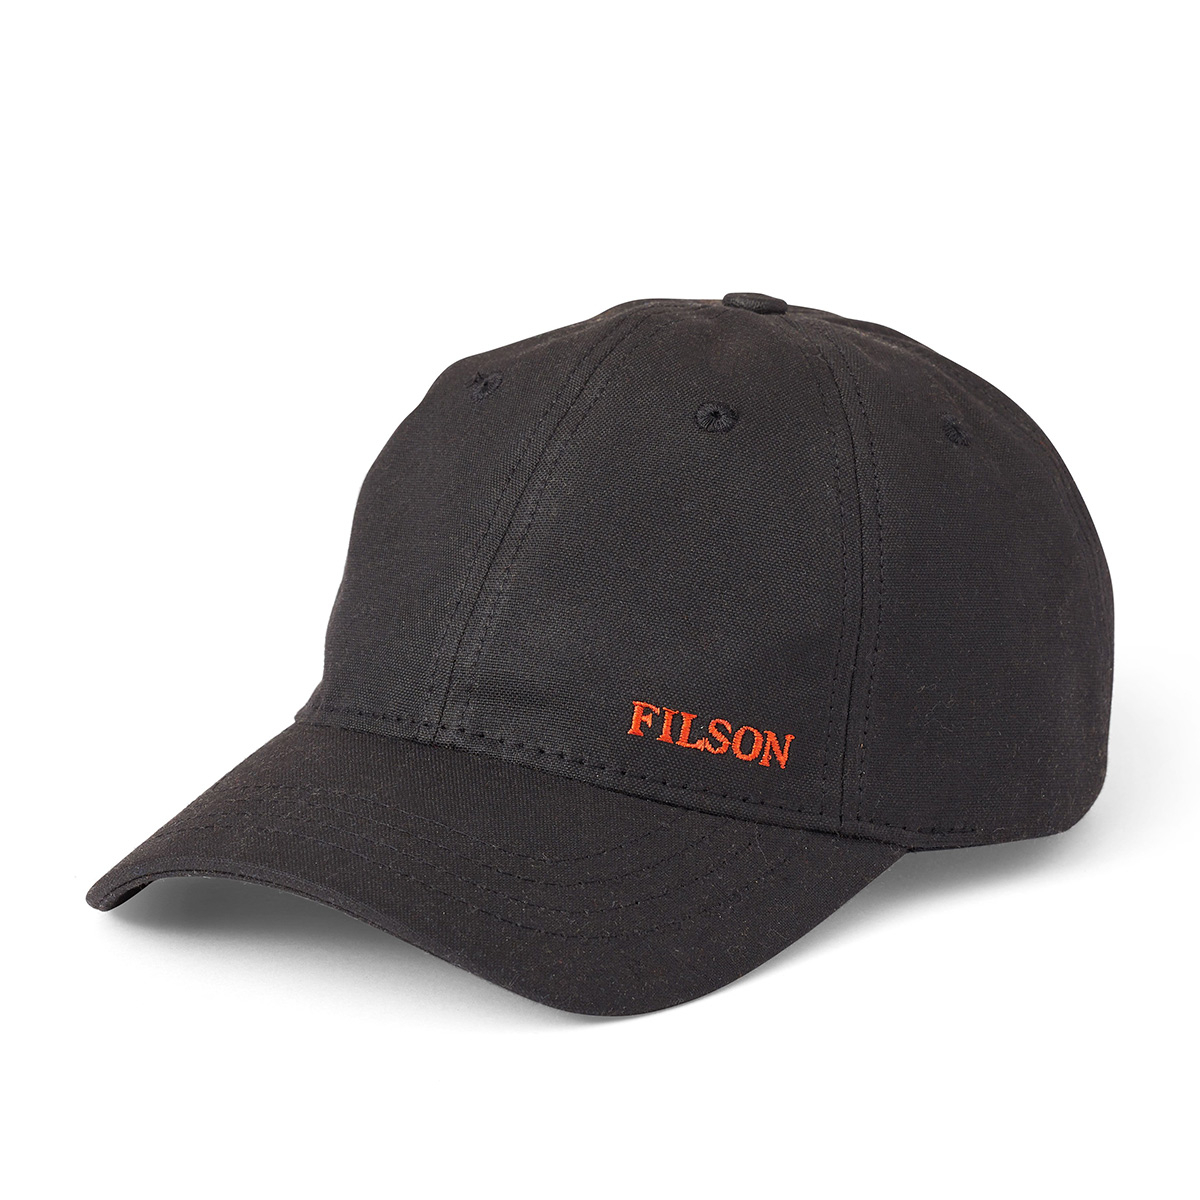 Filson Oil Tin Low-Profile Cap 20172158 Black, mit klassisches Filson-Cap-Design